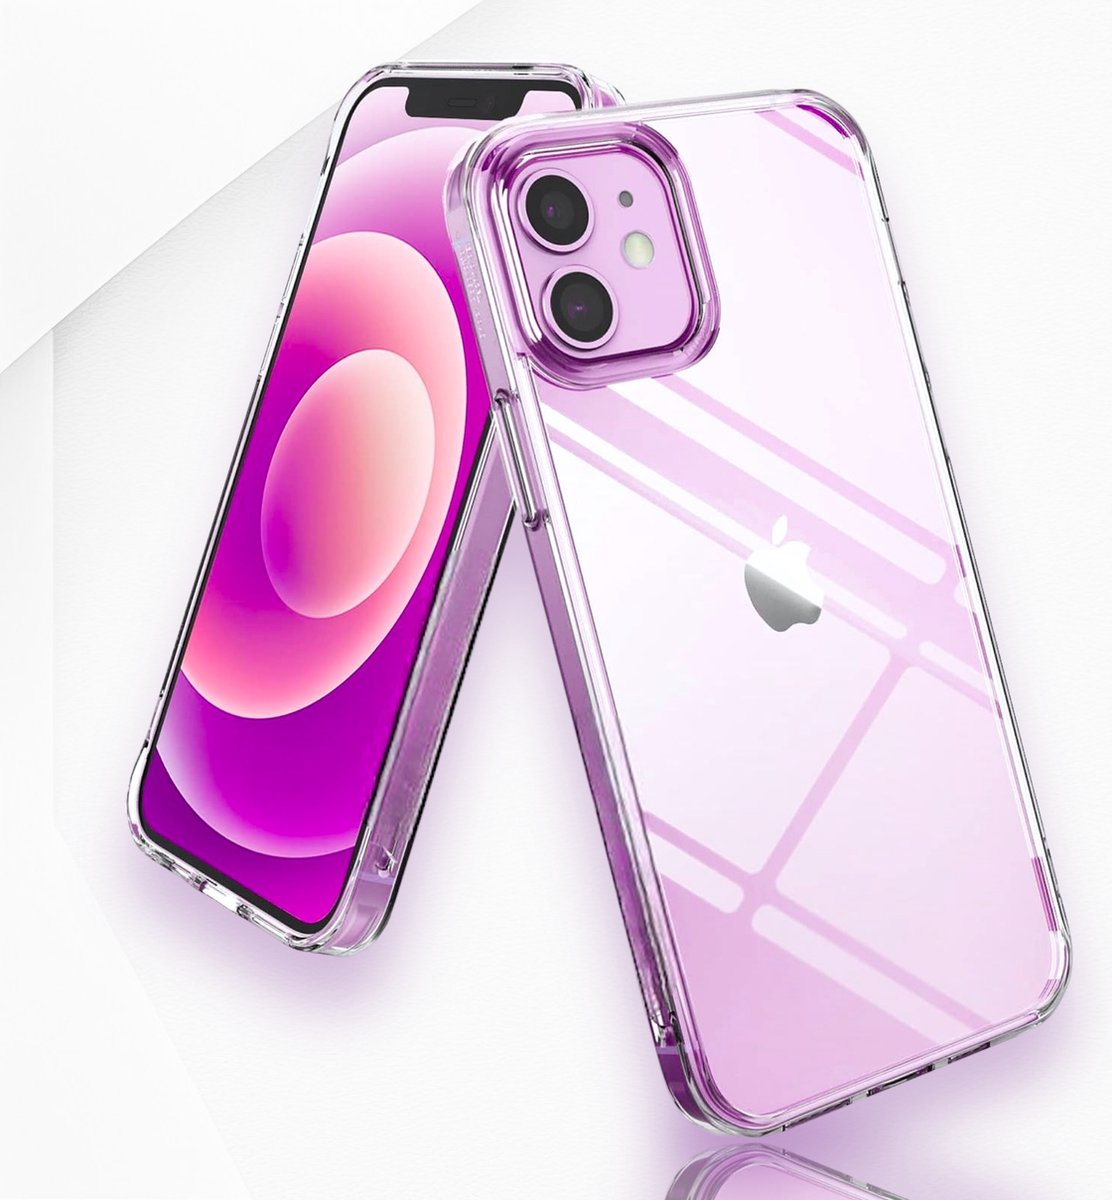 iPhone 12 Mini Hoesje Ultieme Silicone - Transparante Luxe en Kracht Bescherming - Maximaal Stevige Hoesje van Premium Kwaliteit.